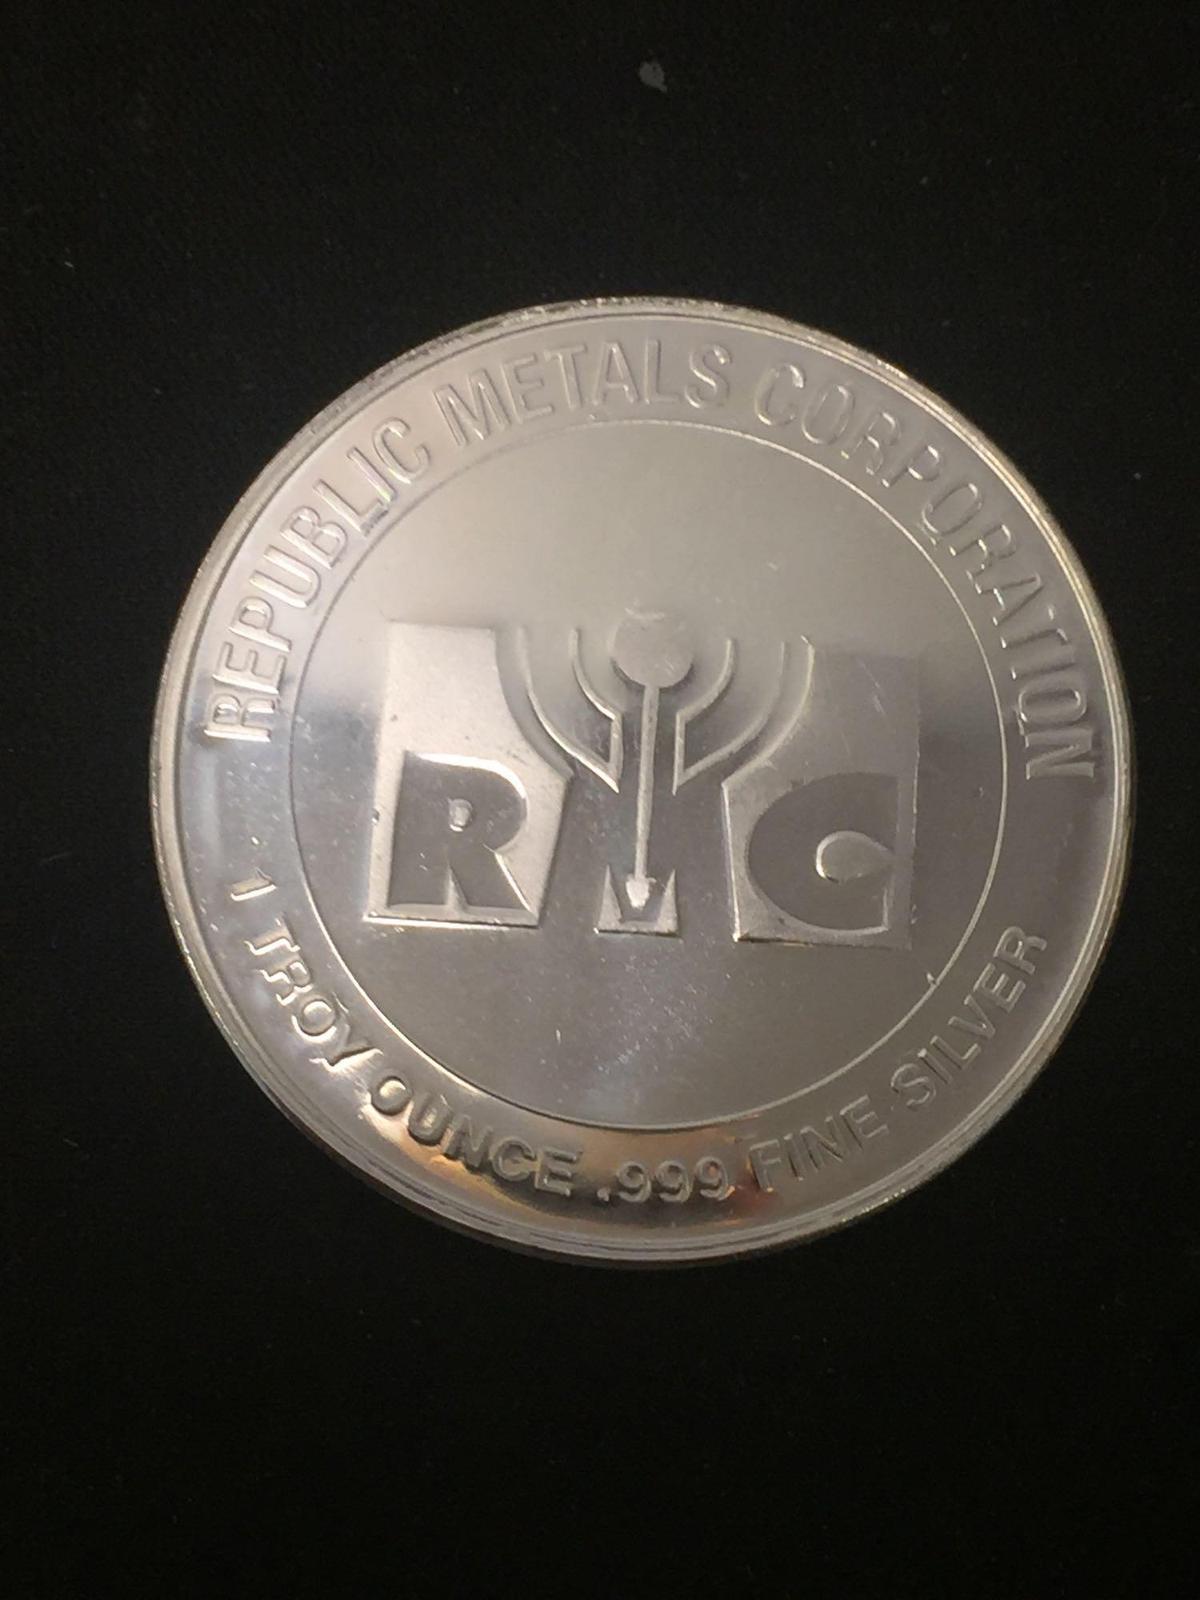 Republic Metals Corporation 1 Troy Ounce .999 Fine Silver Bullion Round UNC